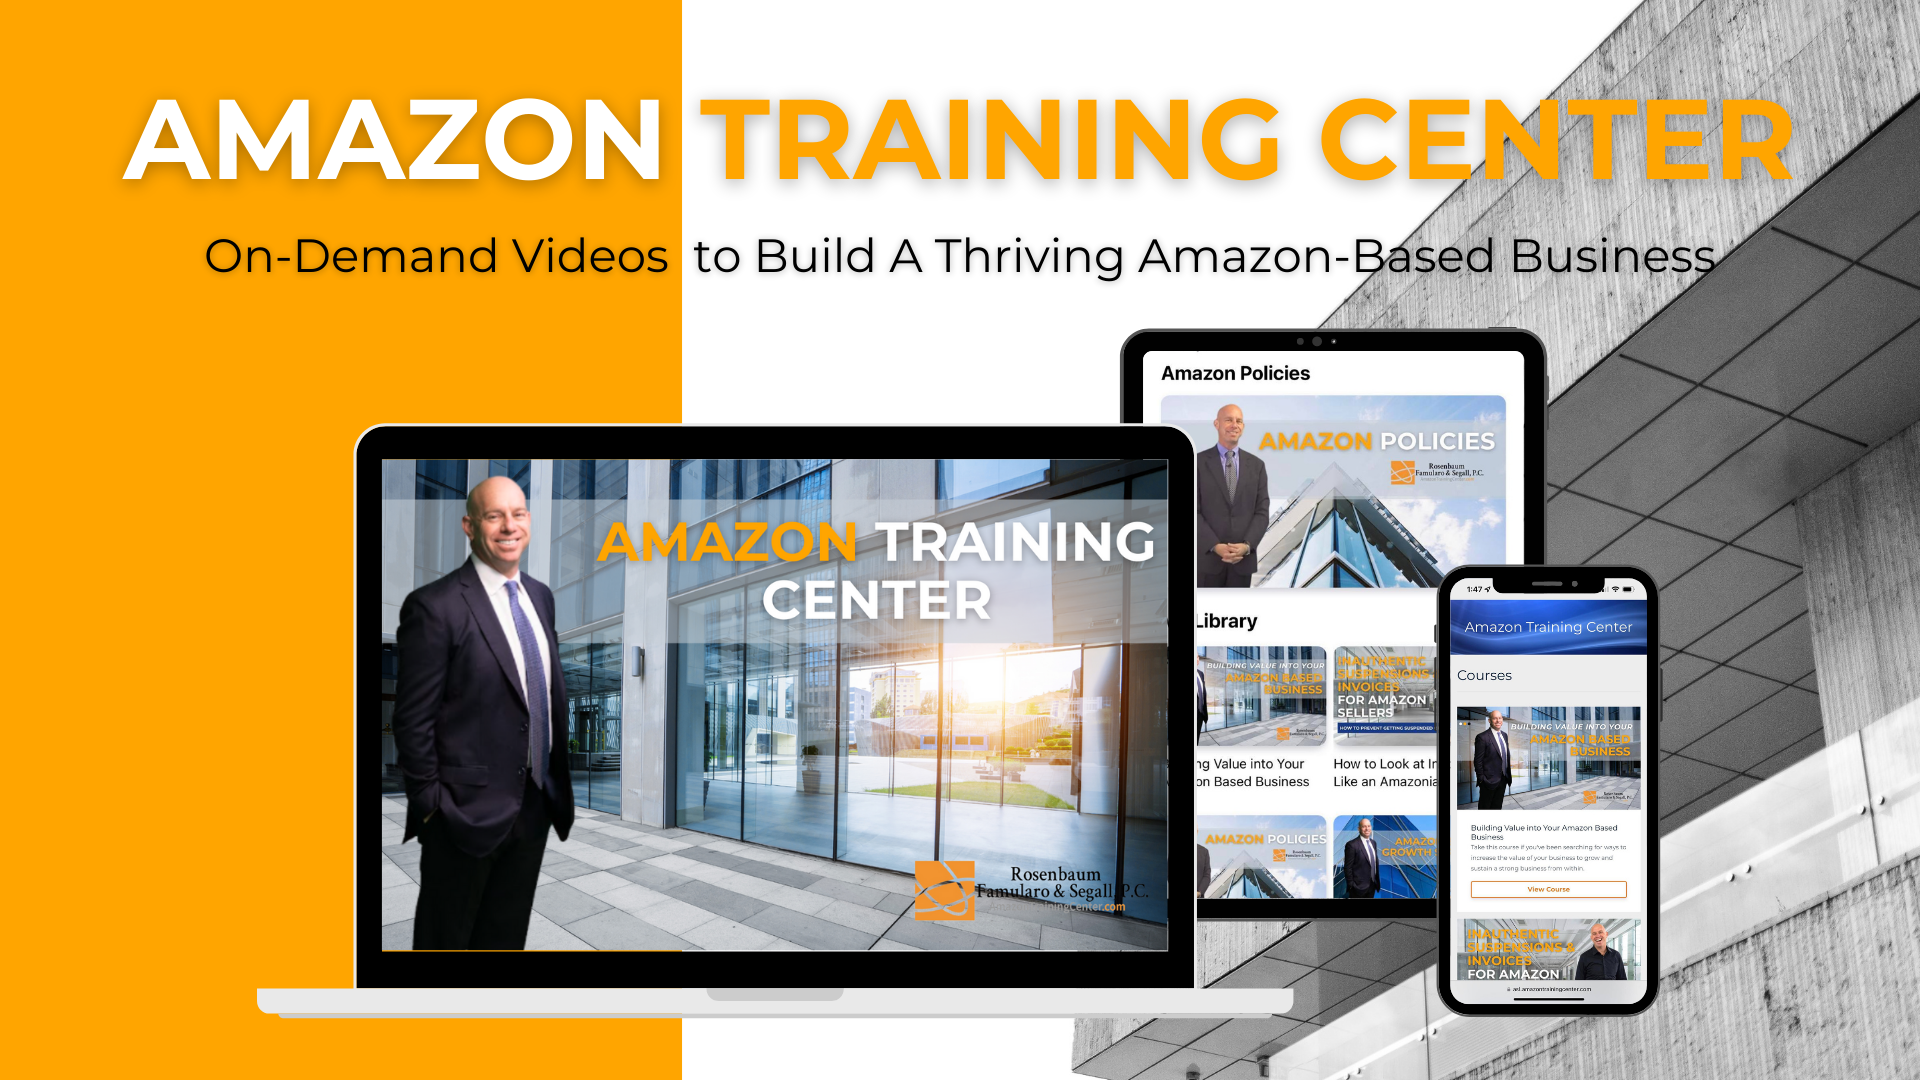 Amazon Training Center on-demand